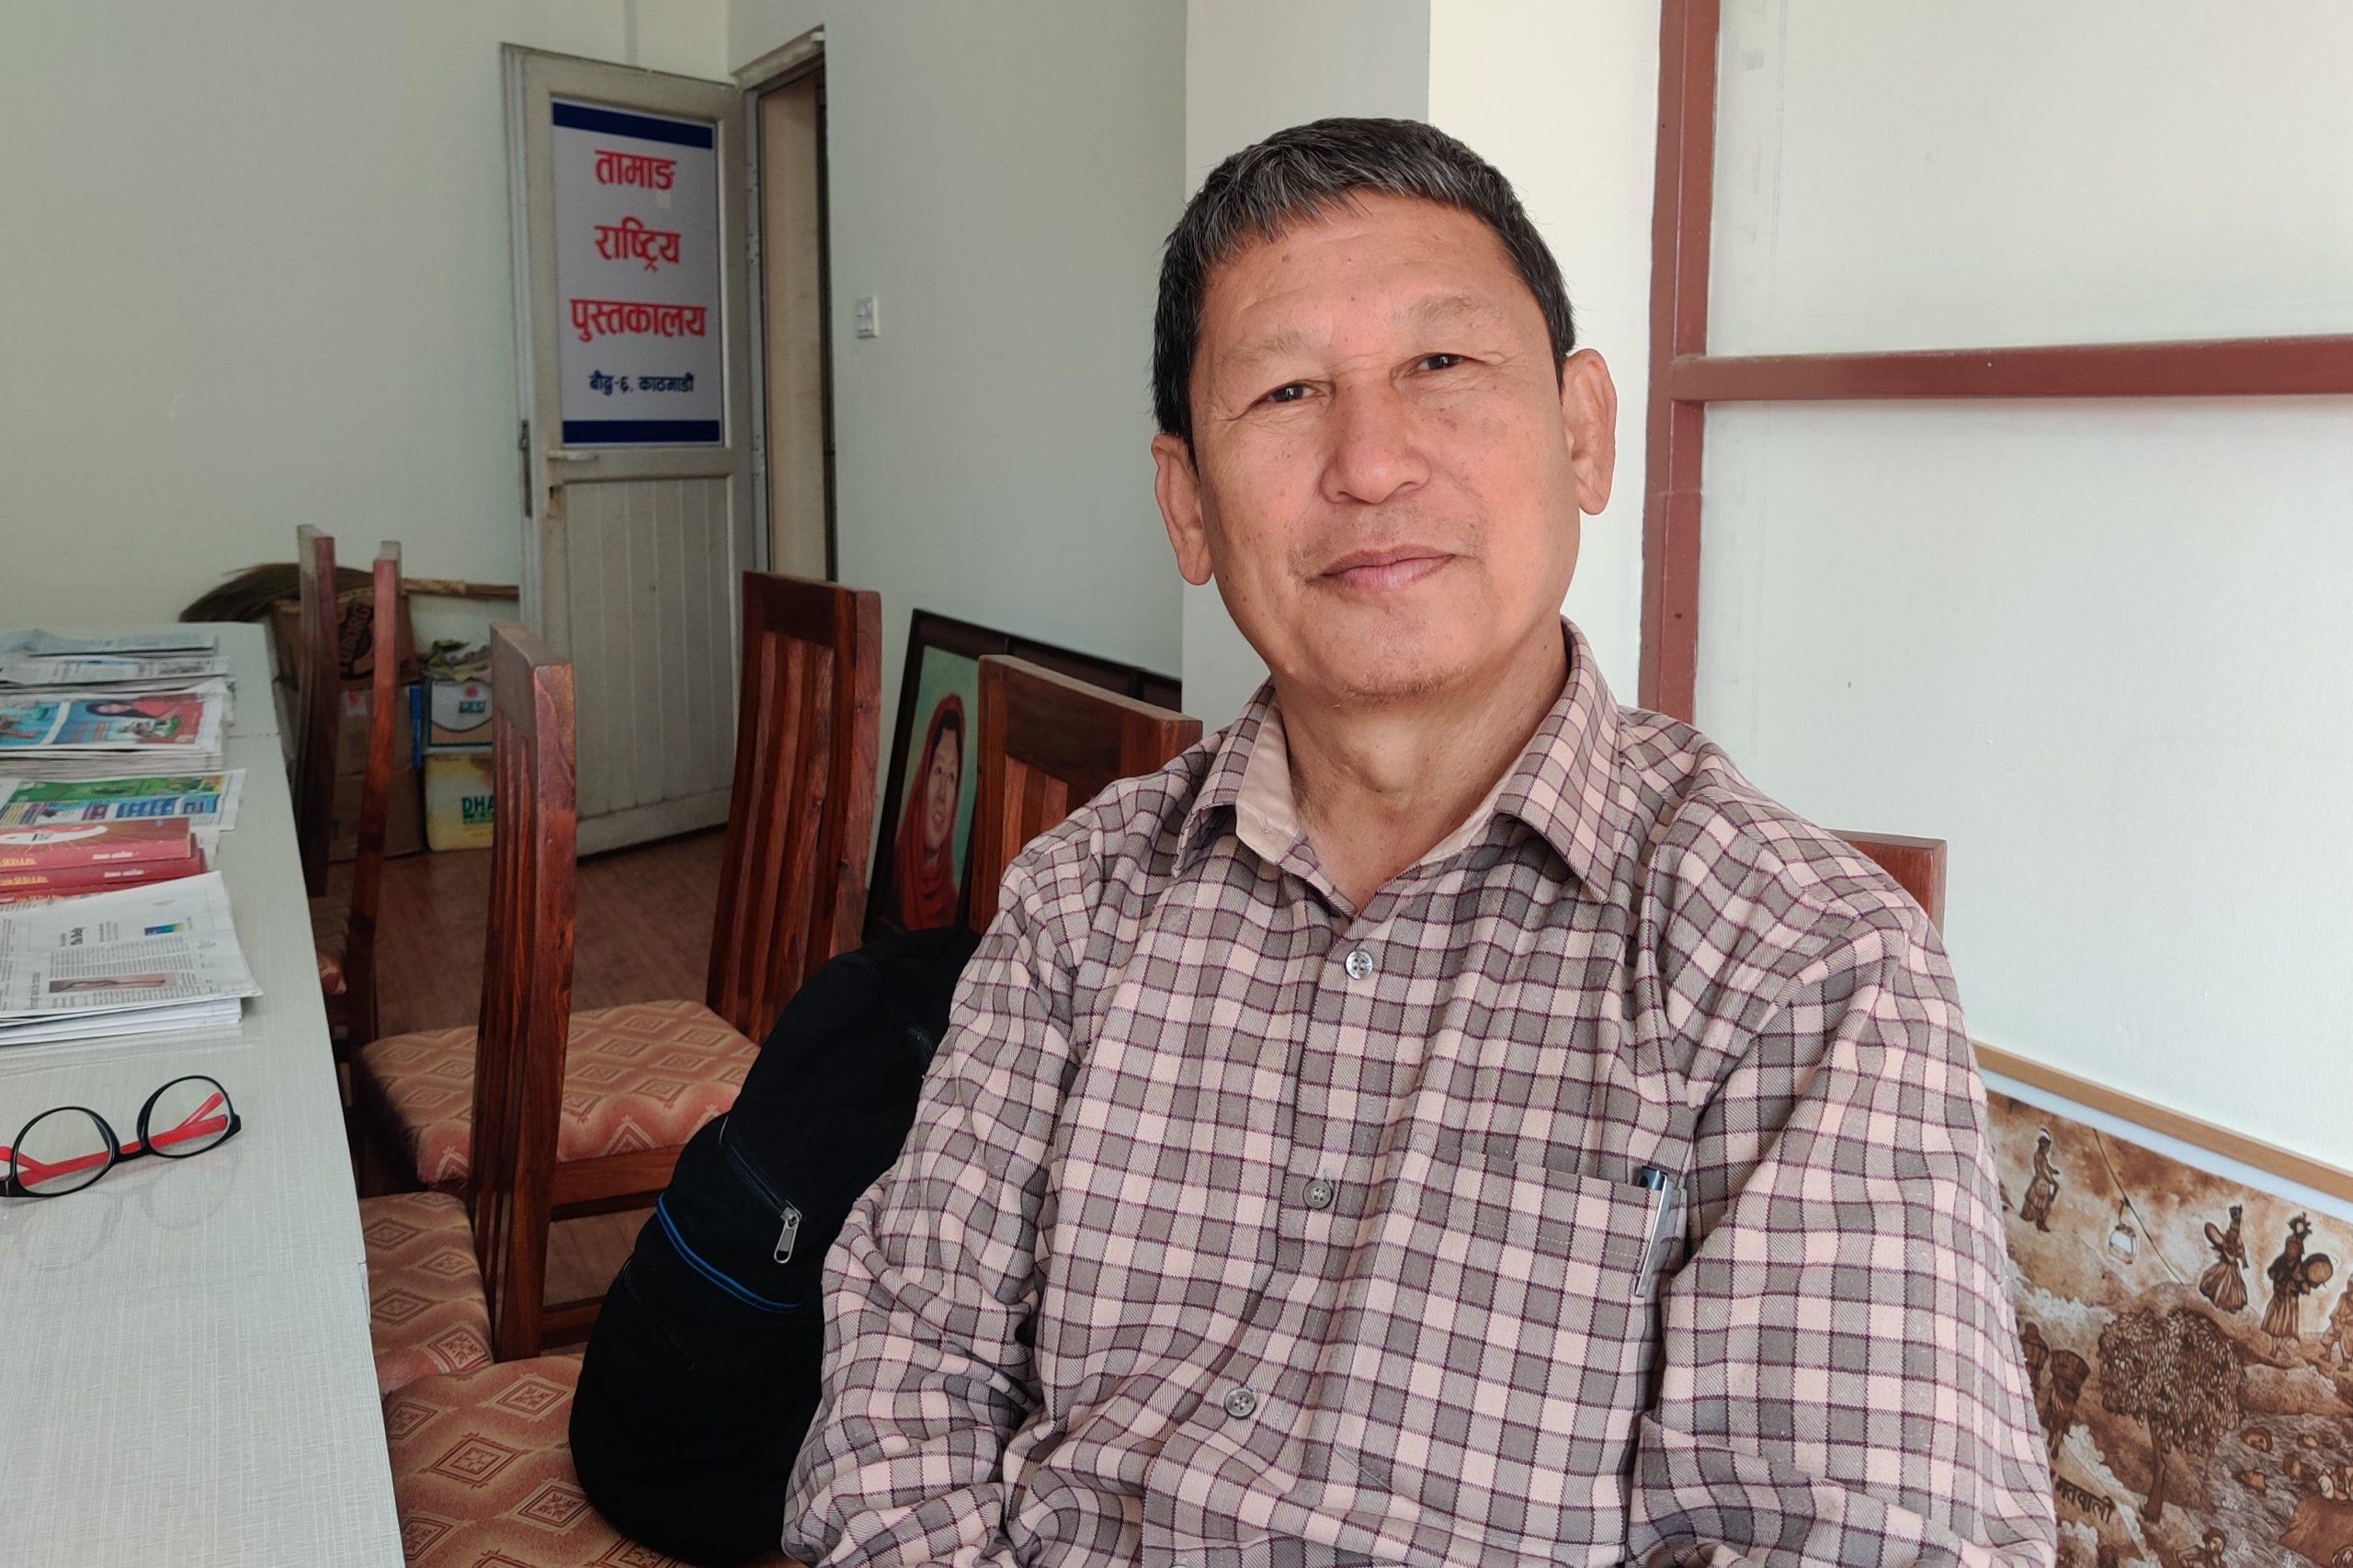 language expert and multi-lingual education advocate Amrit Yonjan-Tamang